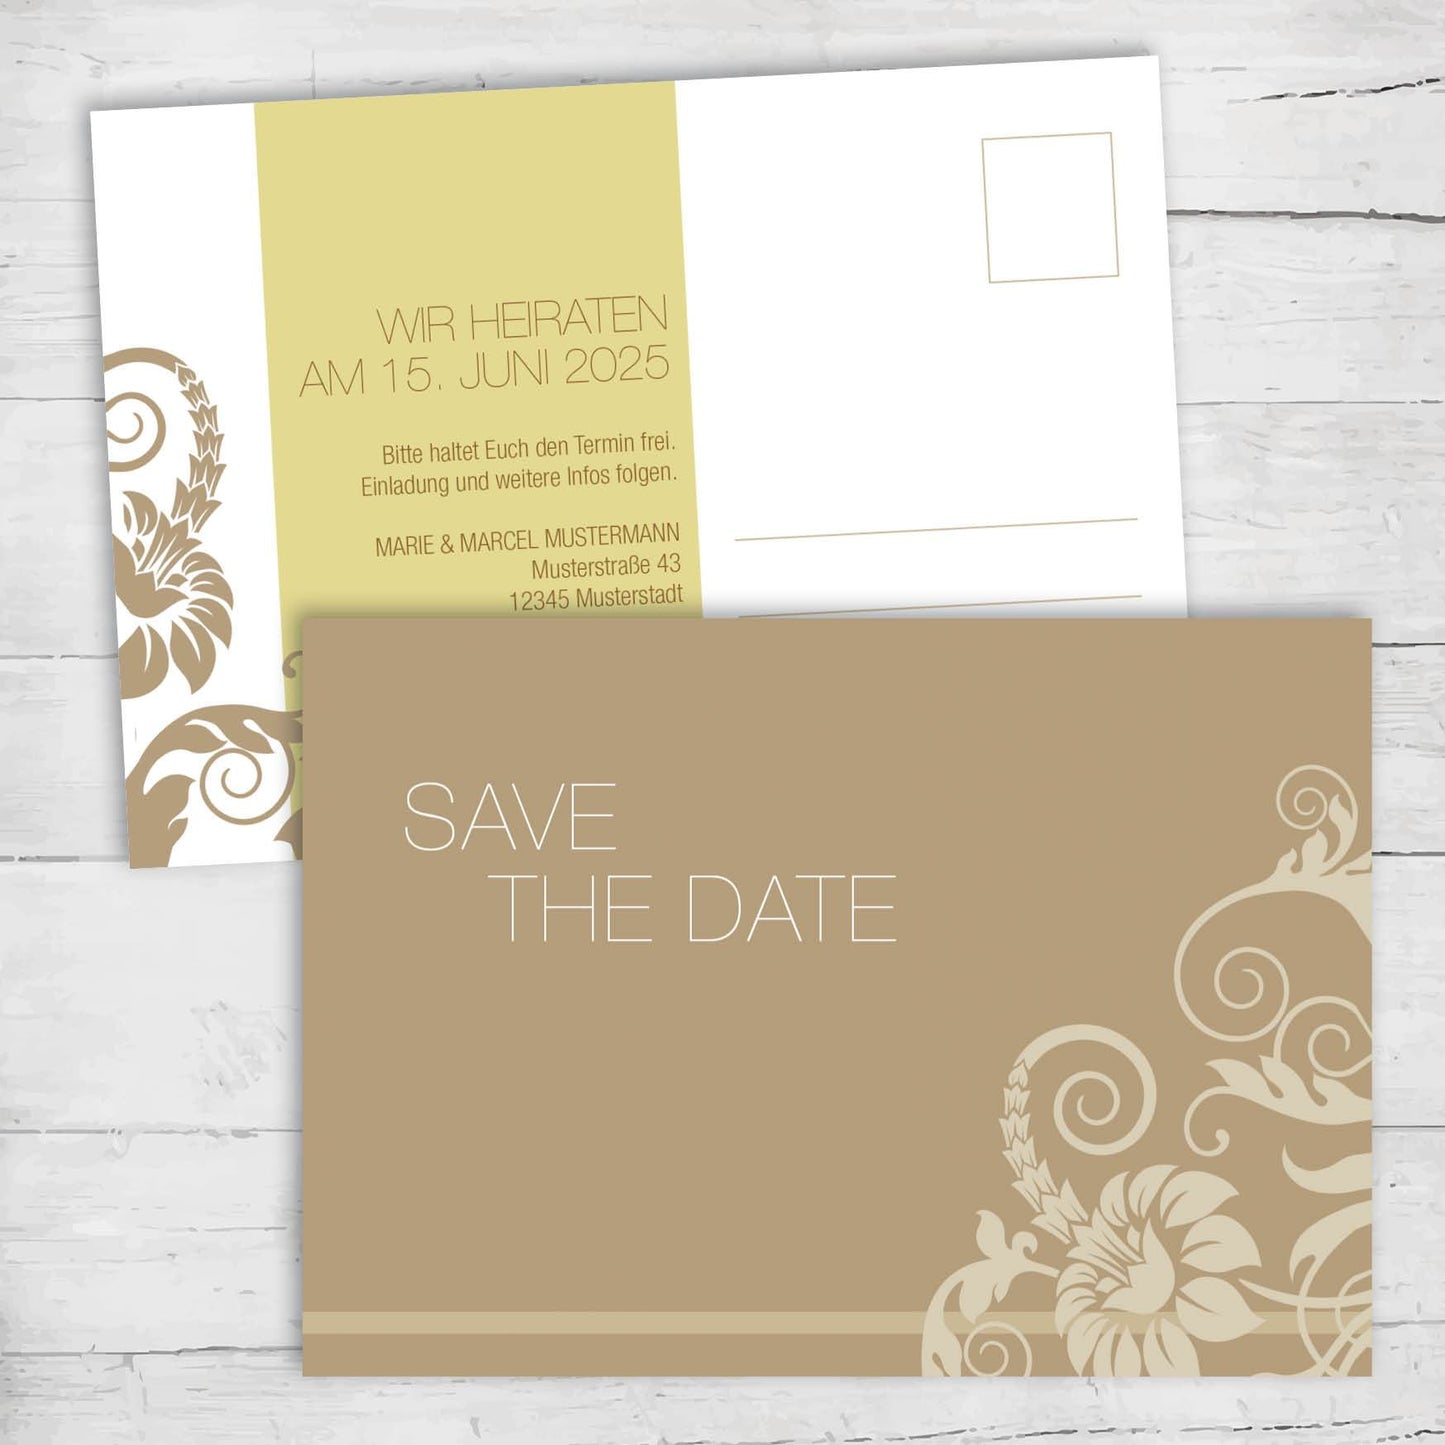 Save the Date Karten: Pavillon Individuelle Einladung